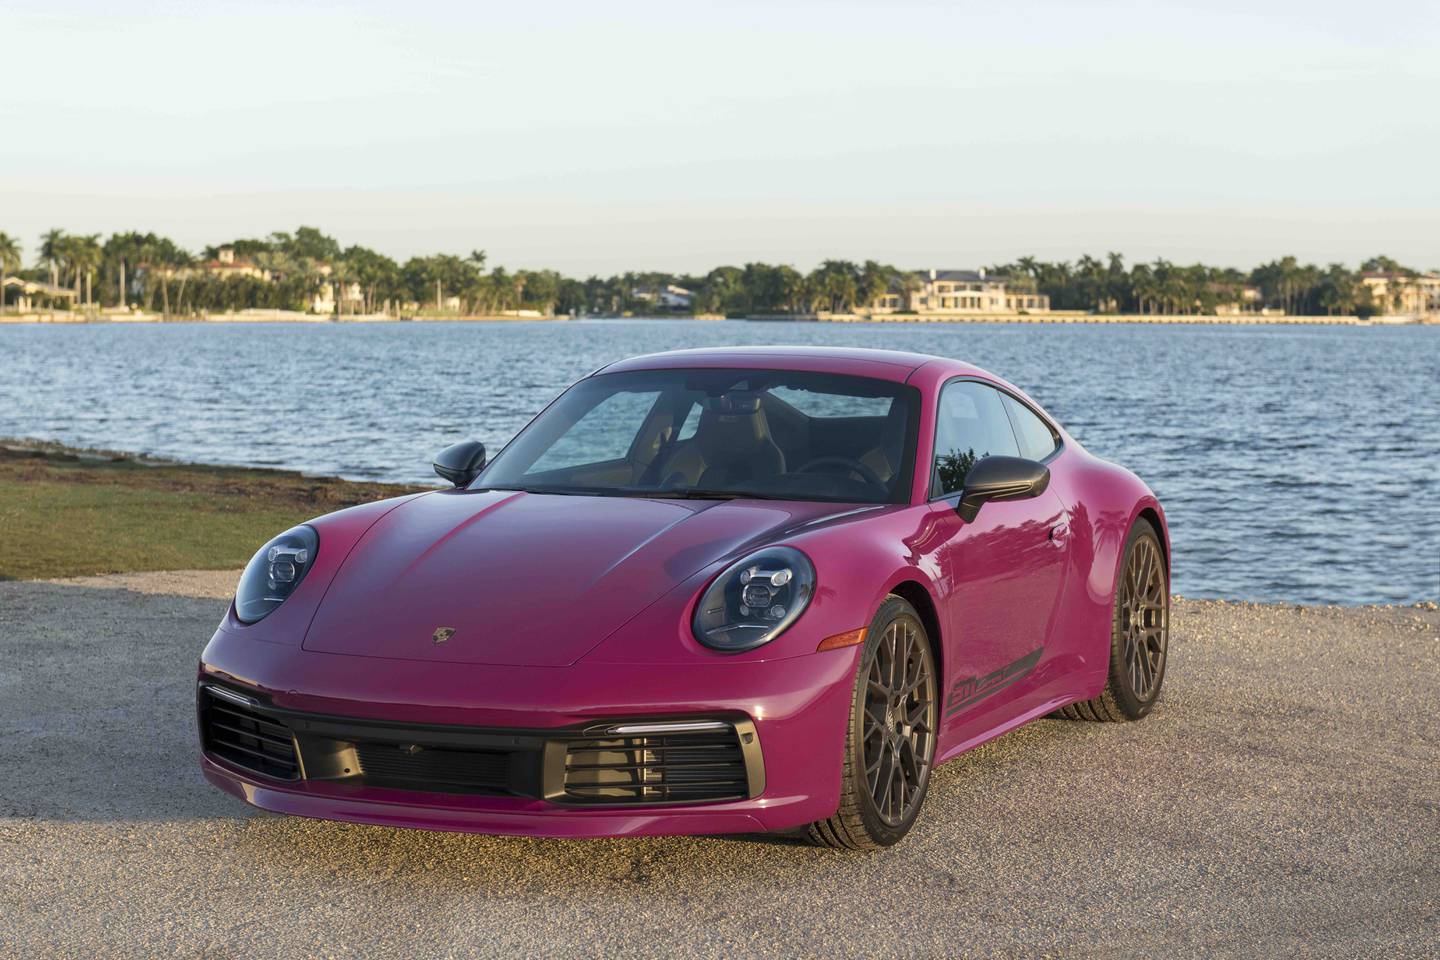 Porsche Test Drive Miami